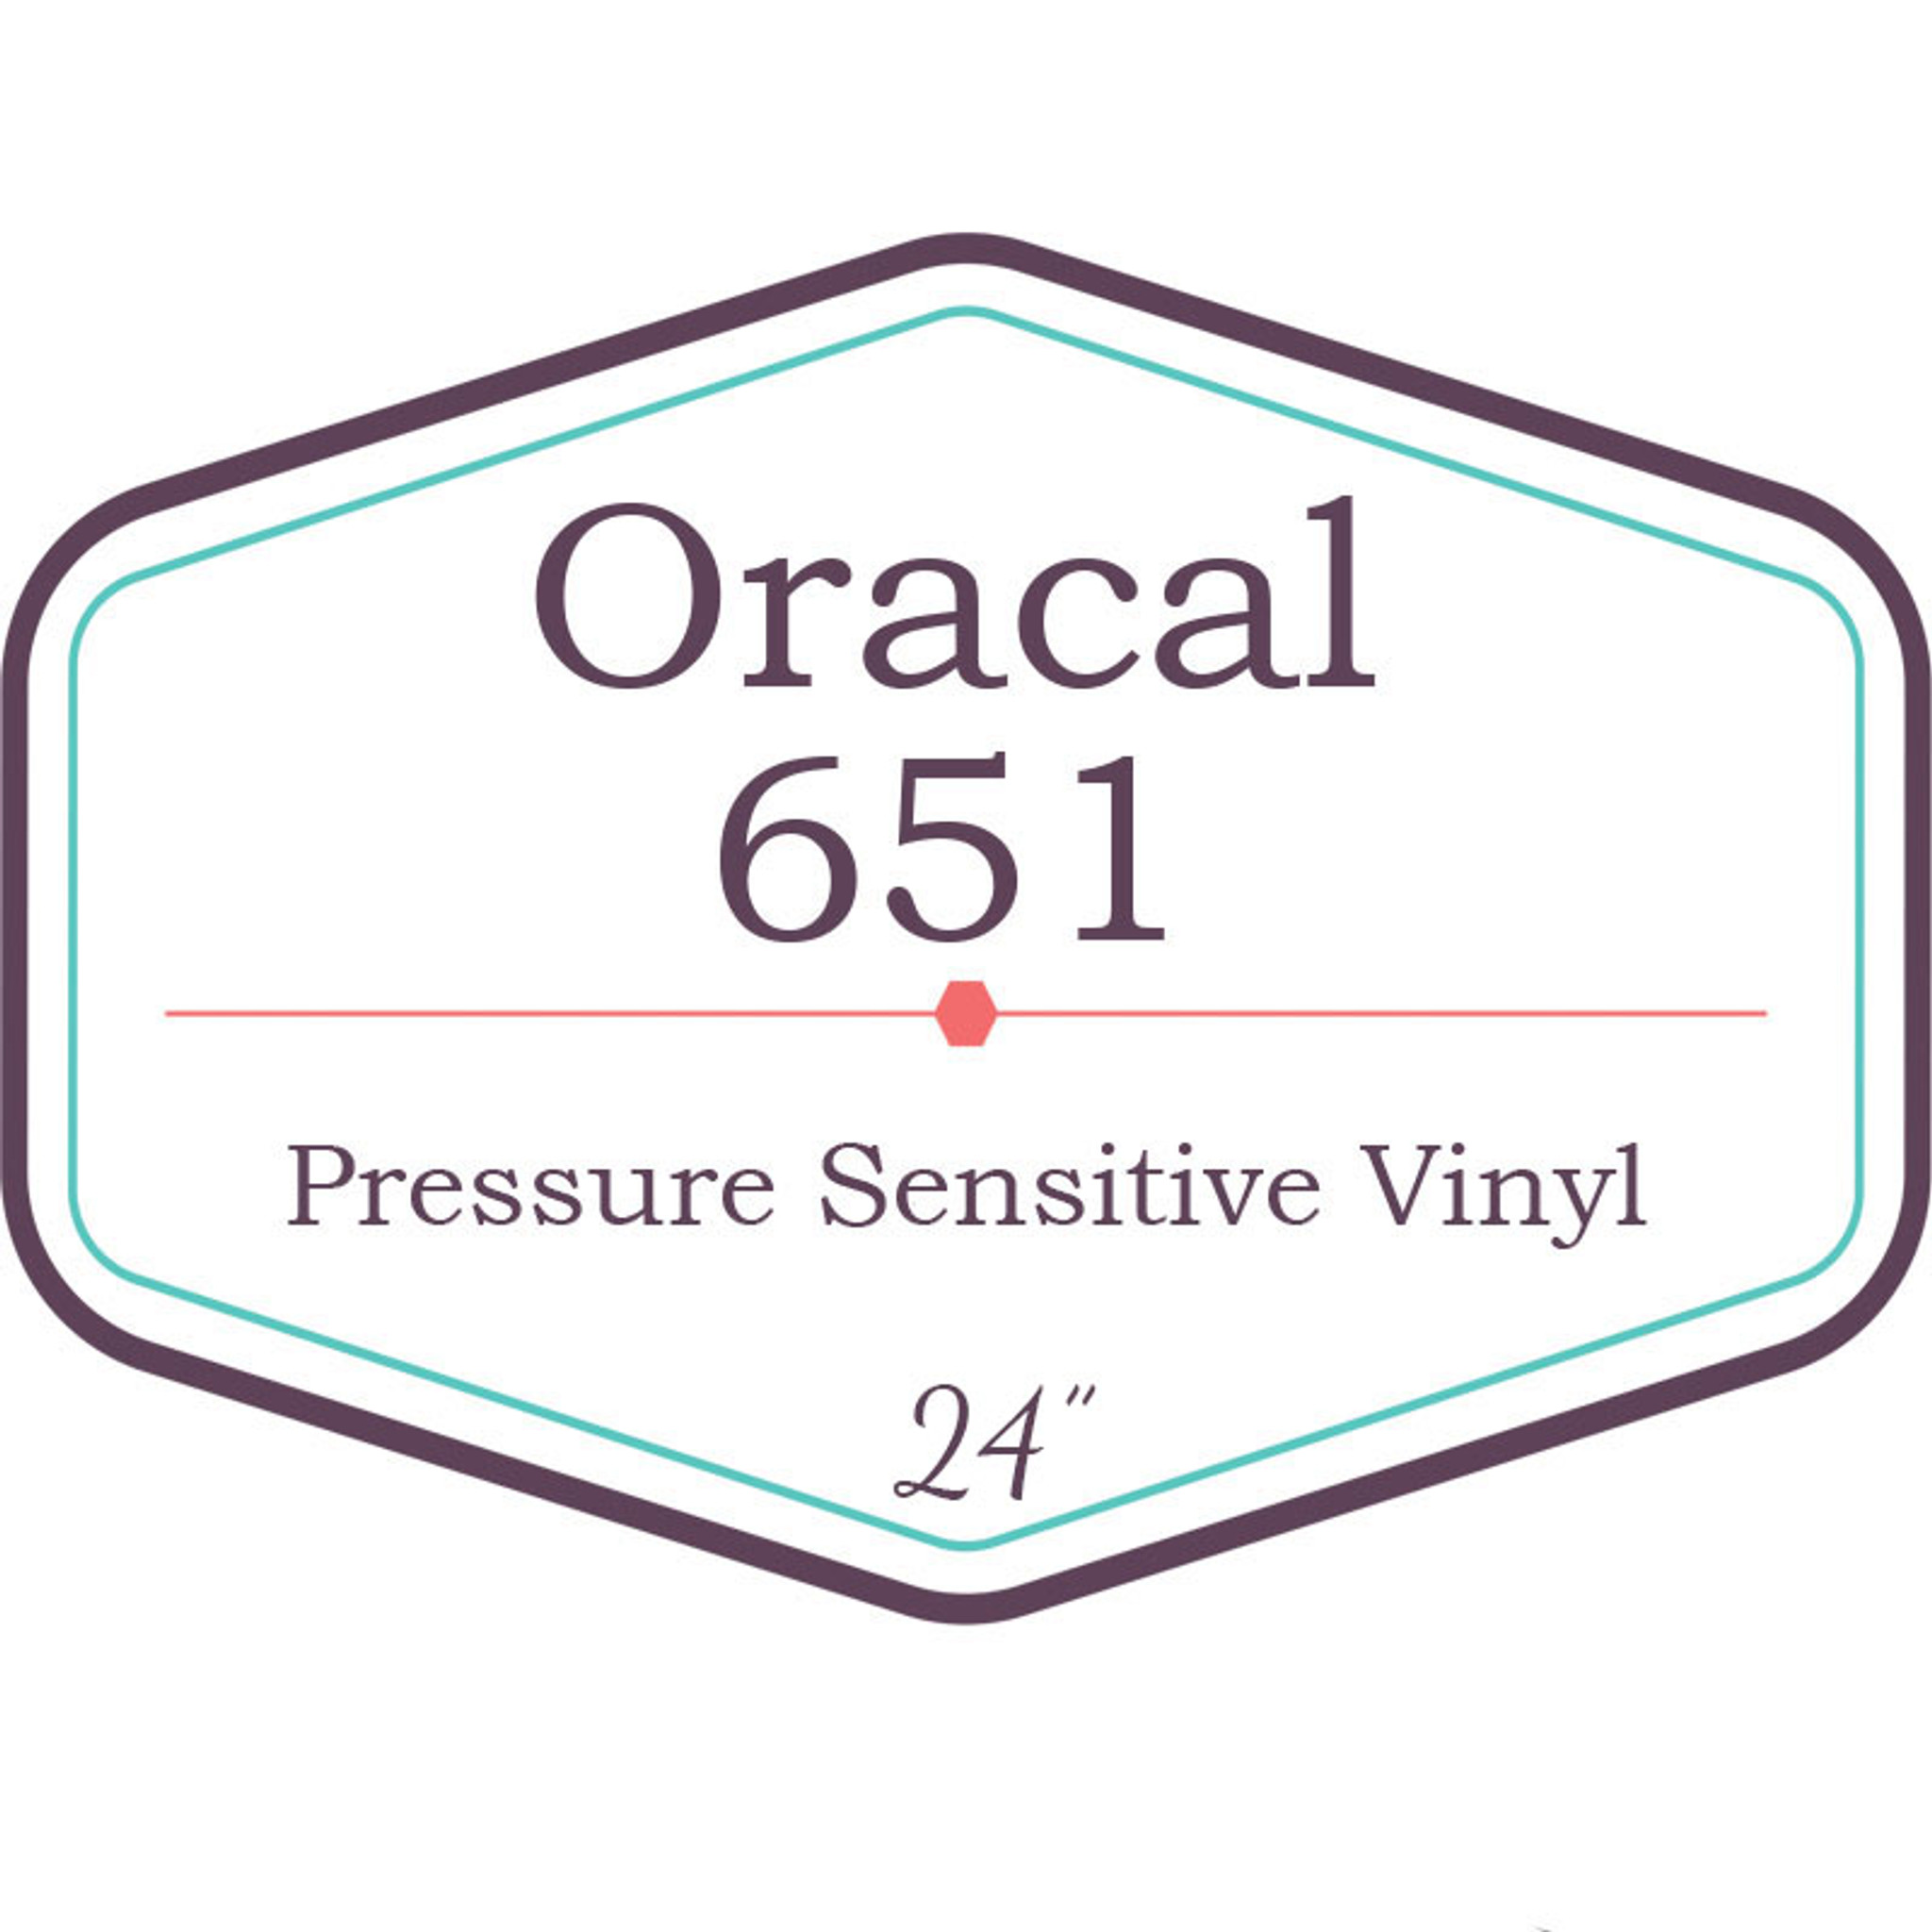 Oracal 651 - Adhesive Vinyl - 24 in x 10 yds - 24 in x 10 yds / Black